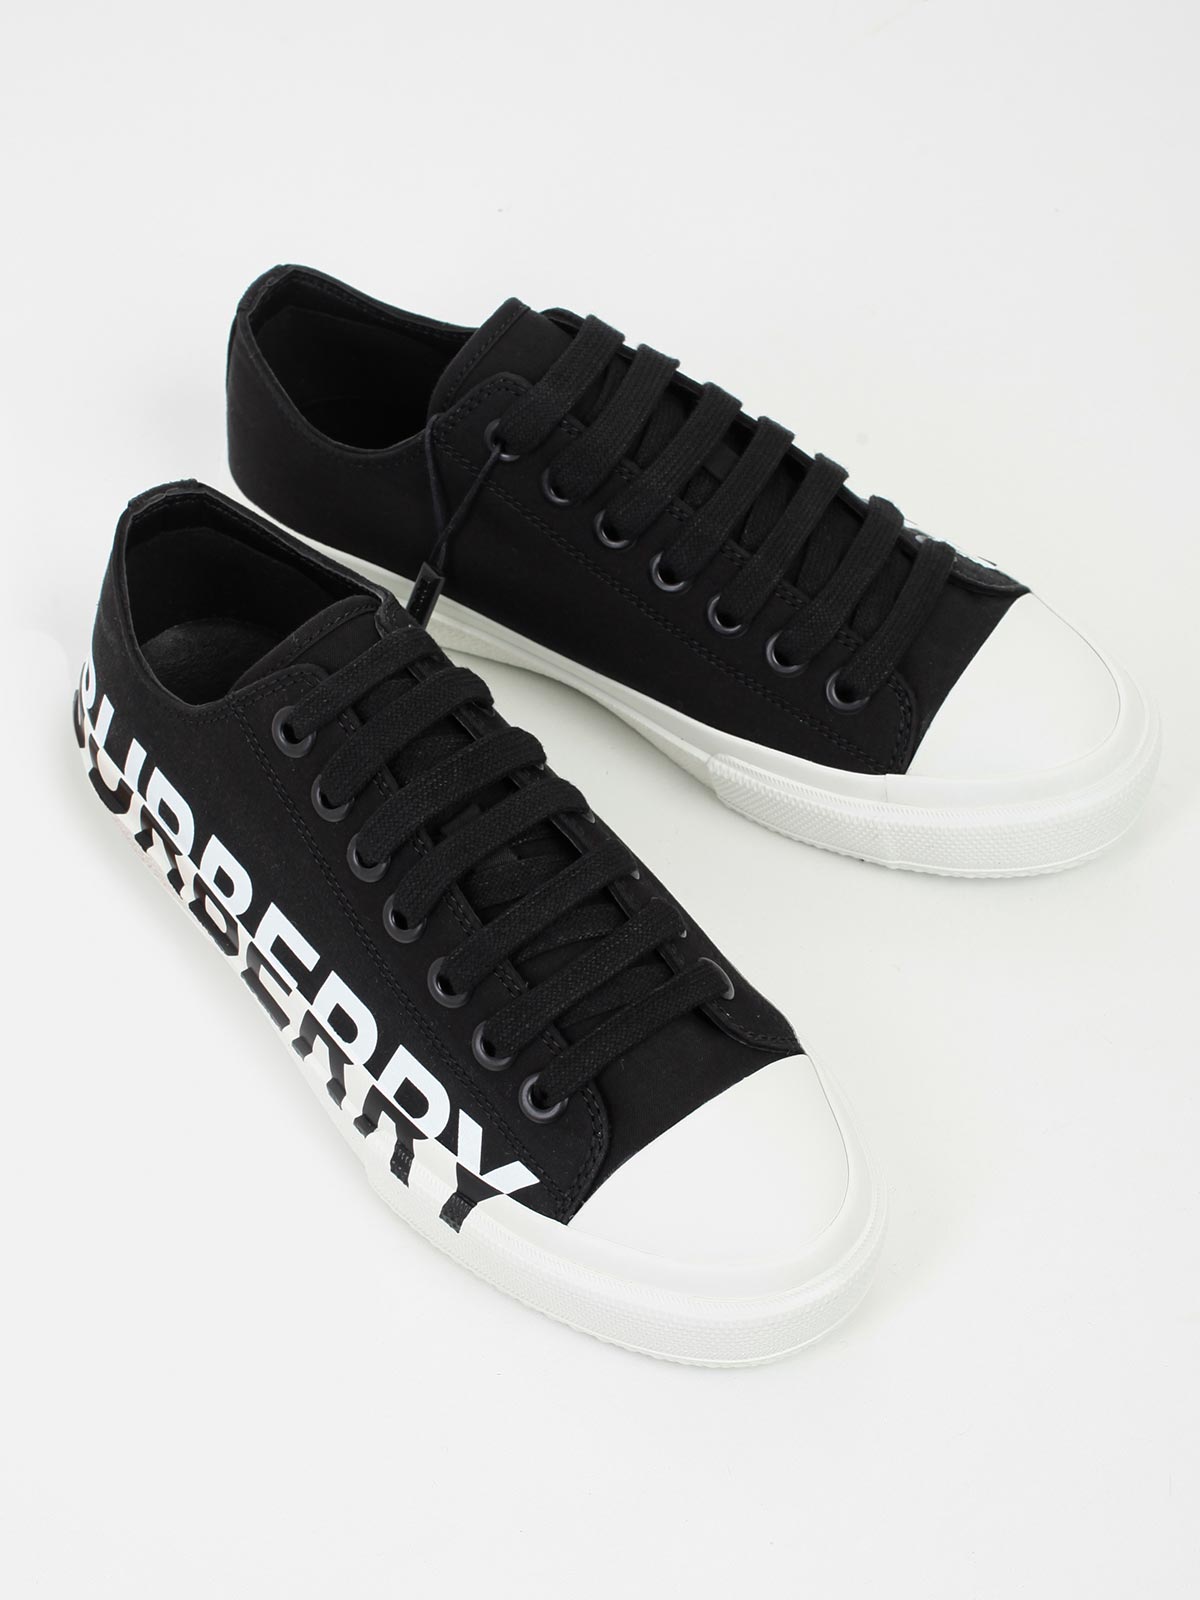 burberry shoes black white